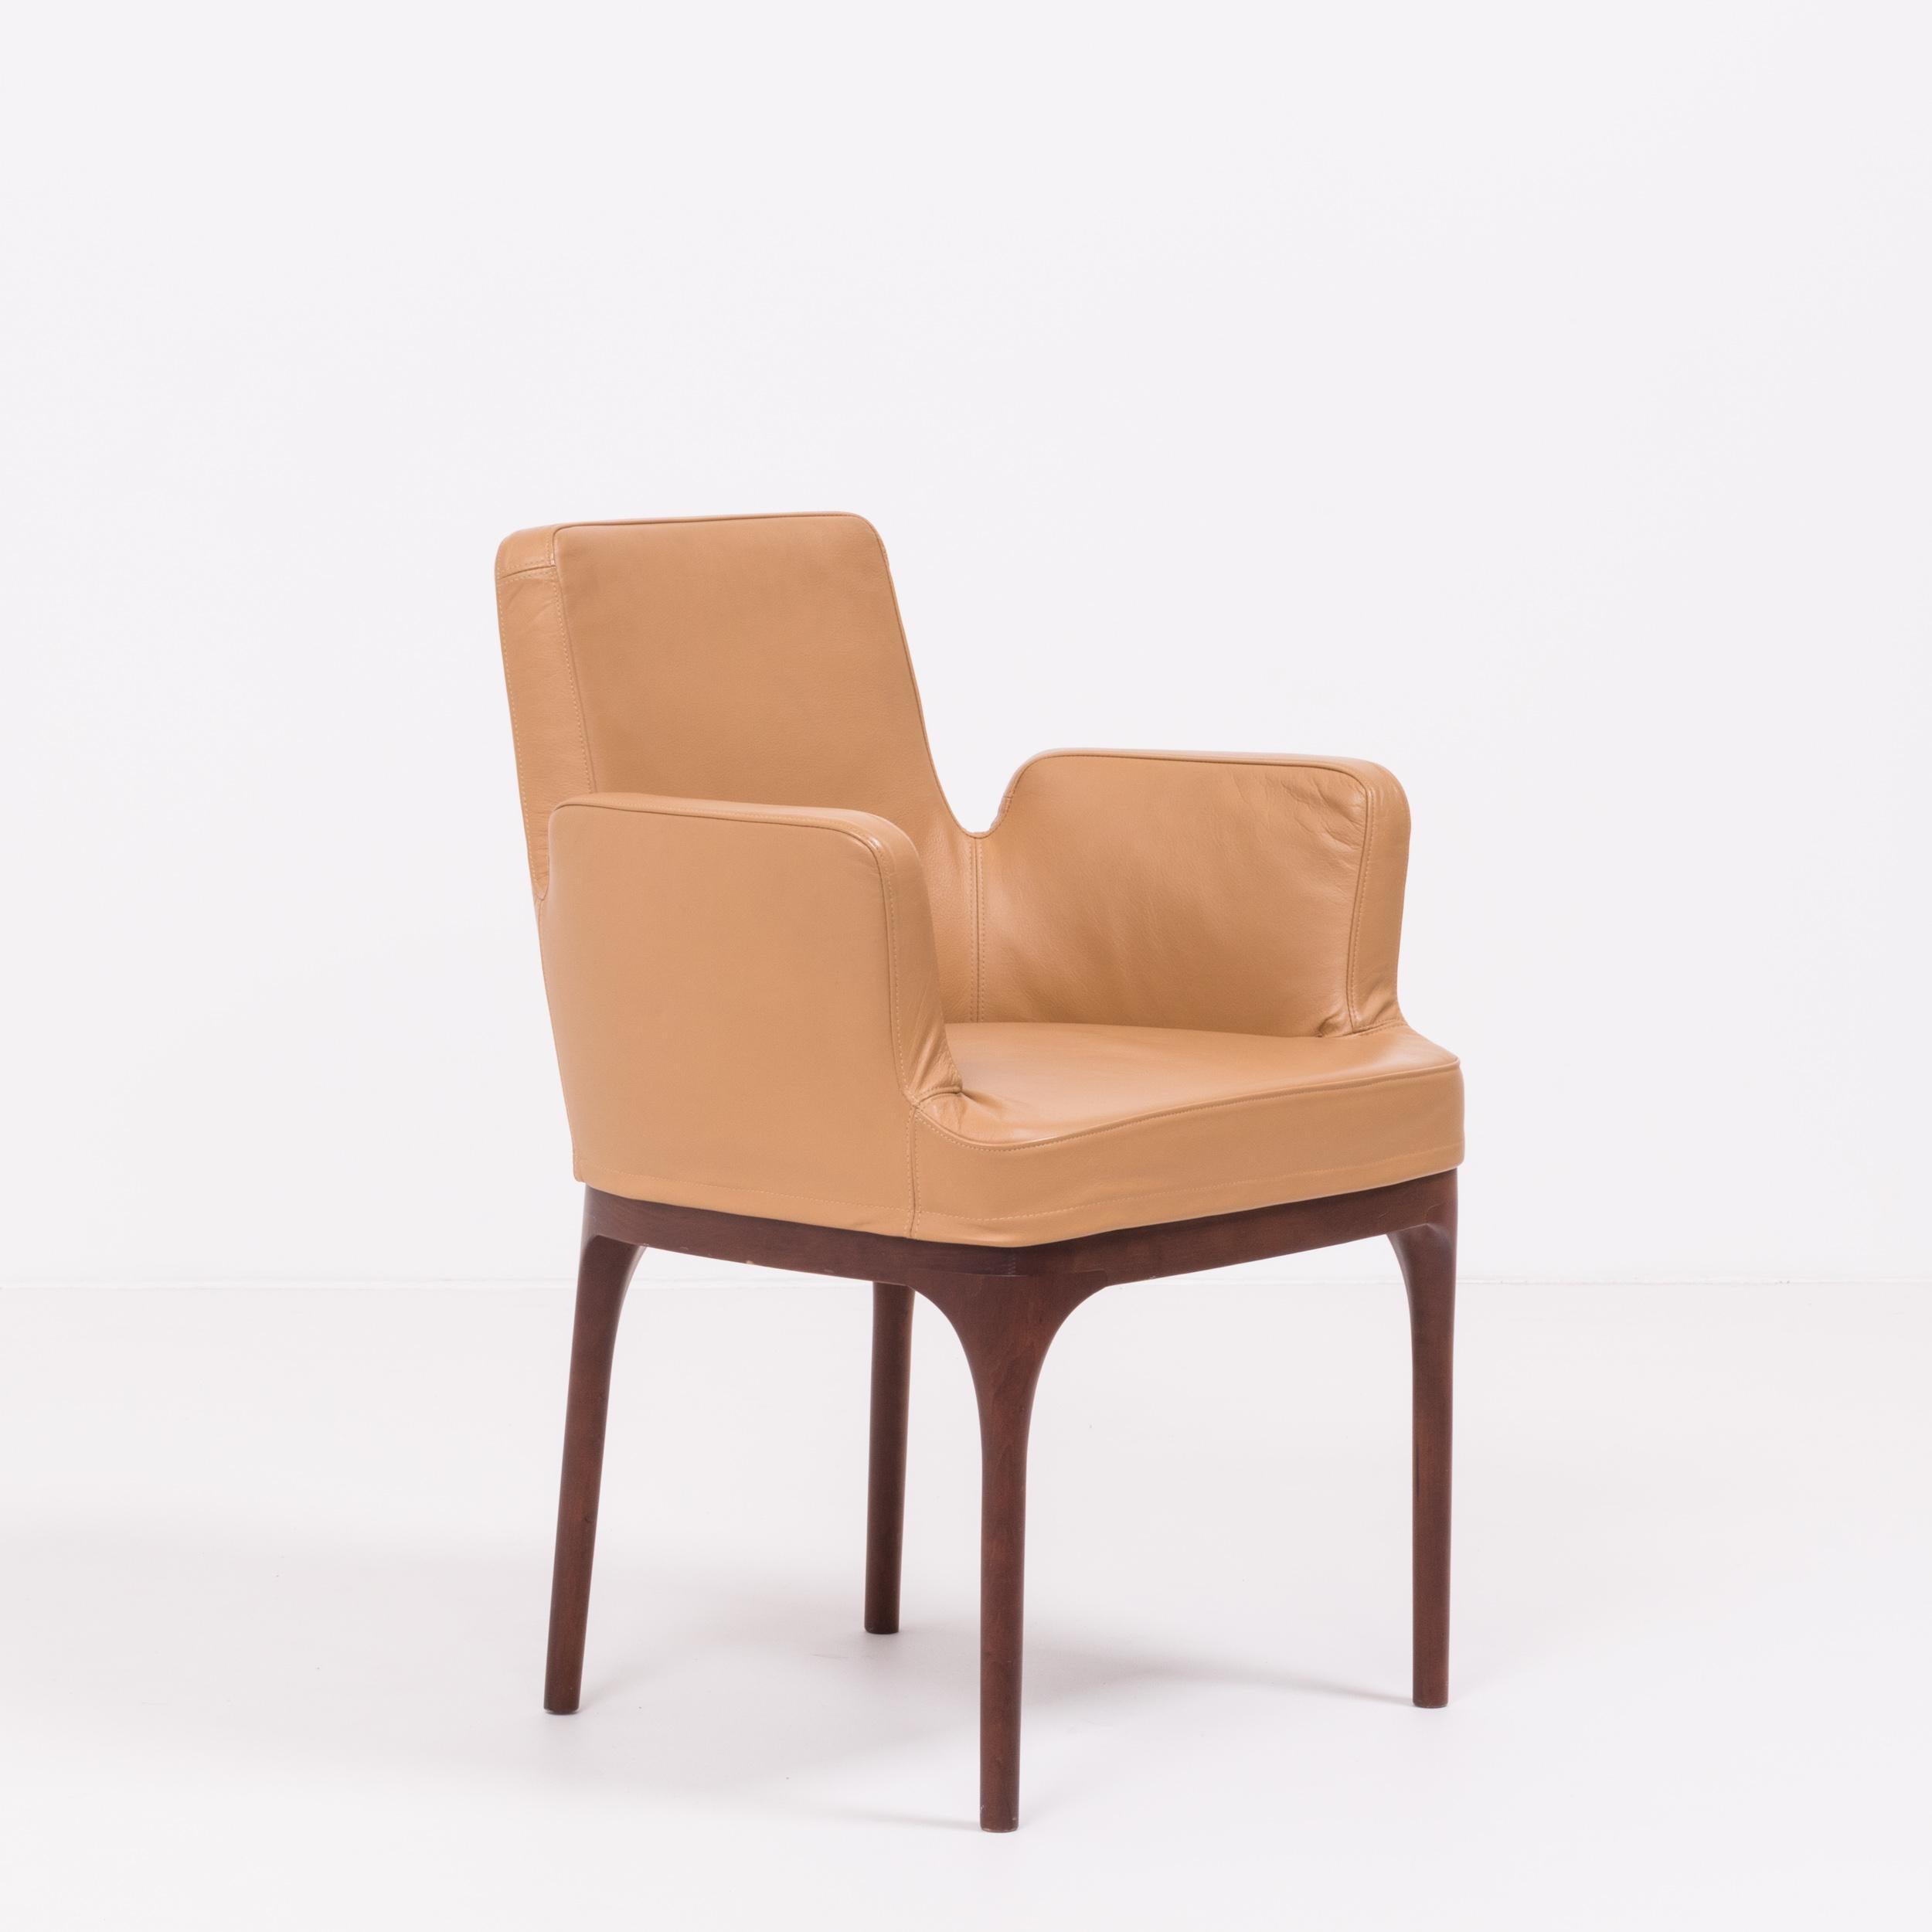 Italian Porada Mid Century Brown Leather Dining Chairs, Set of 2